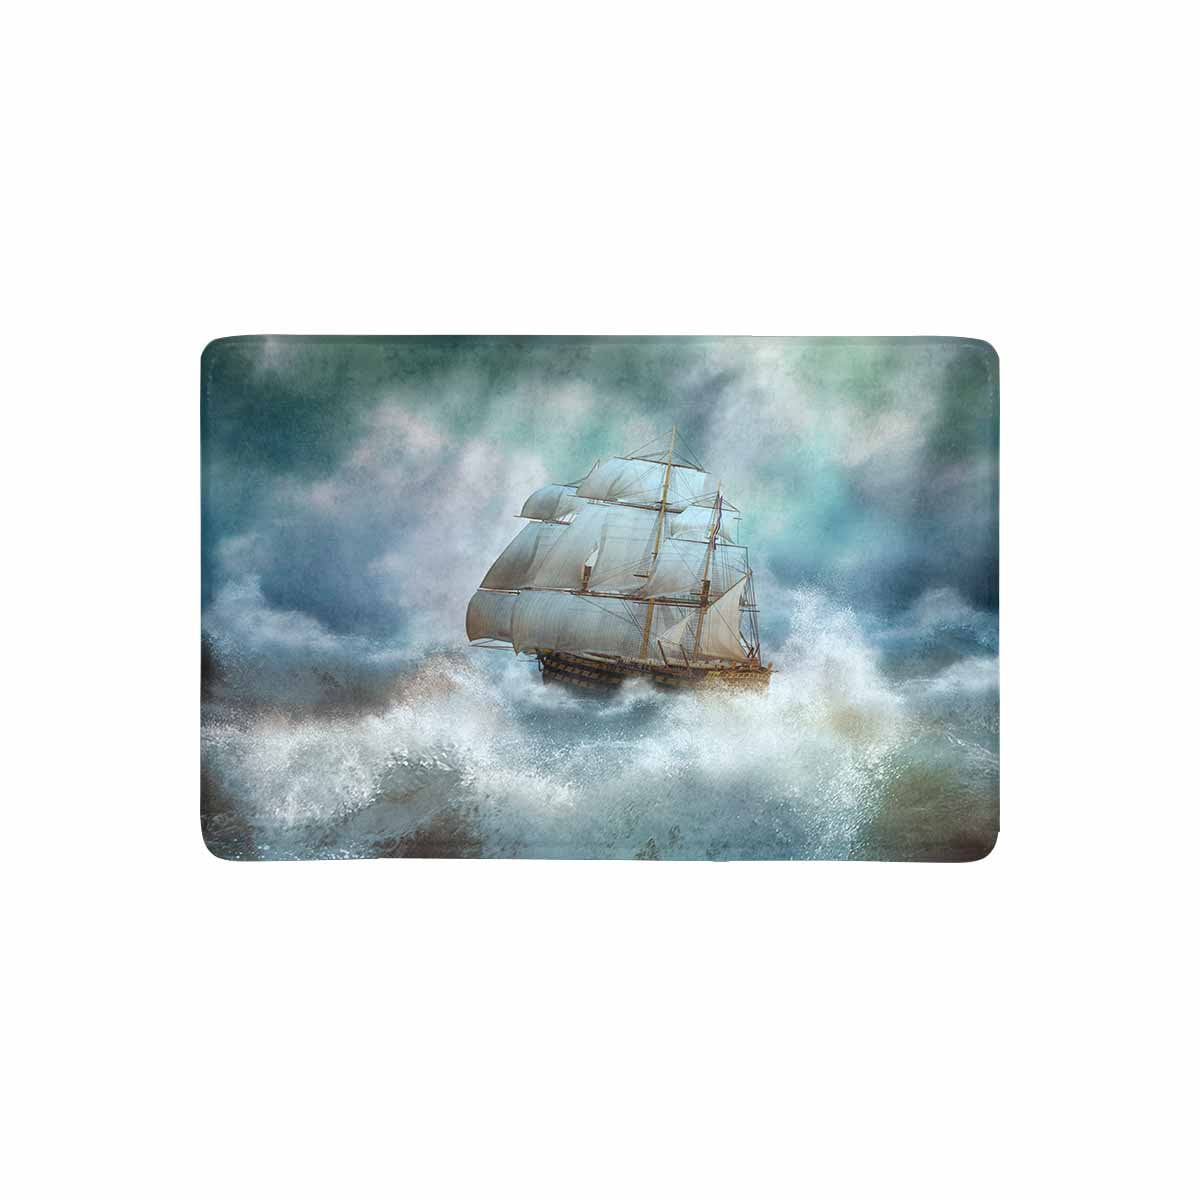 Flying Dutchman Pirate Ship Floor Memory Foam Rug Carpet Non-slip Door Bath Mat 